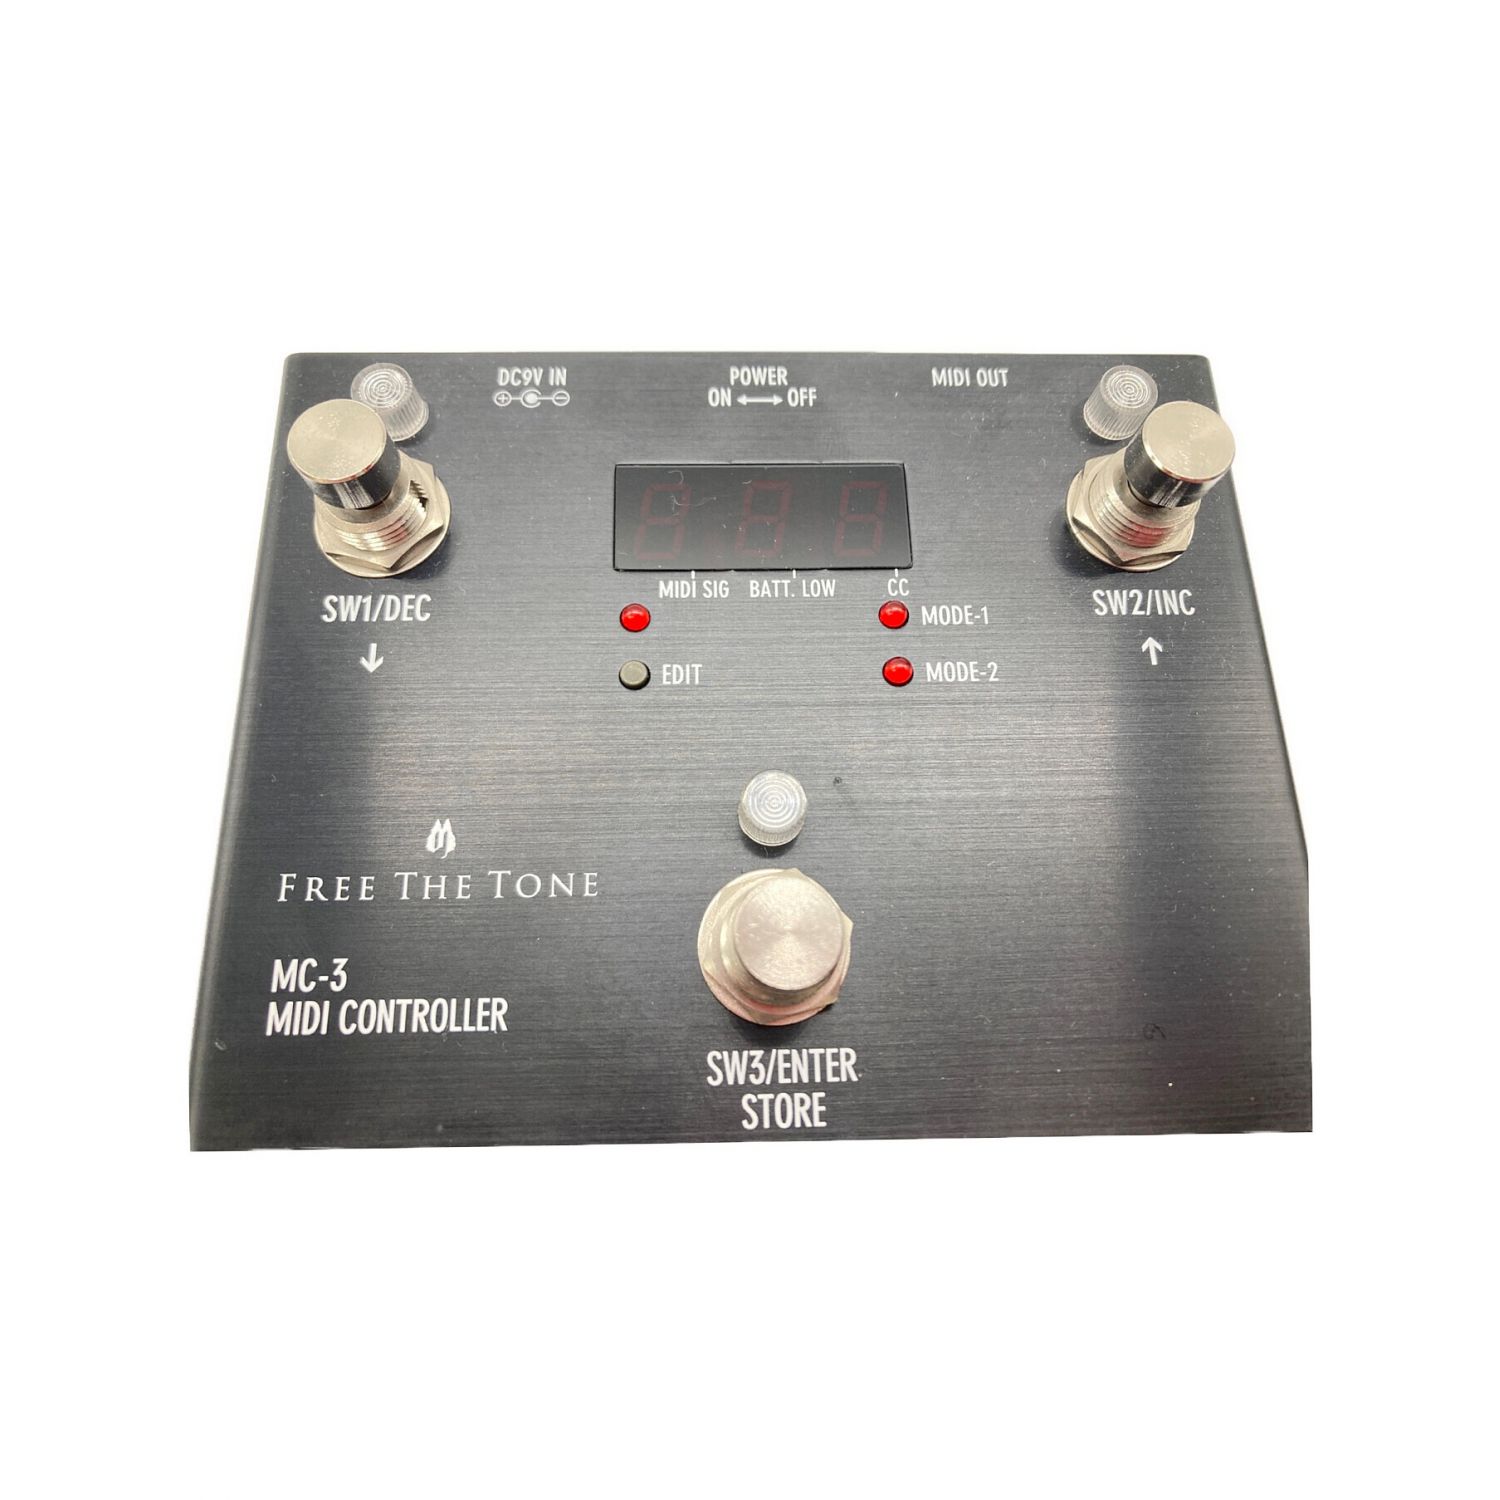 MC-3 MIDI CONTROLLER / free the tone